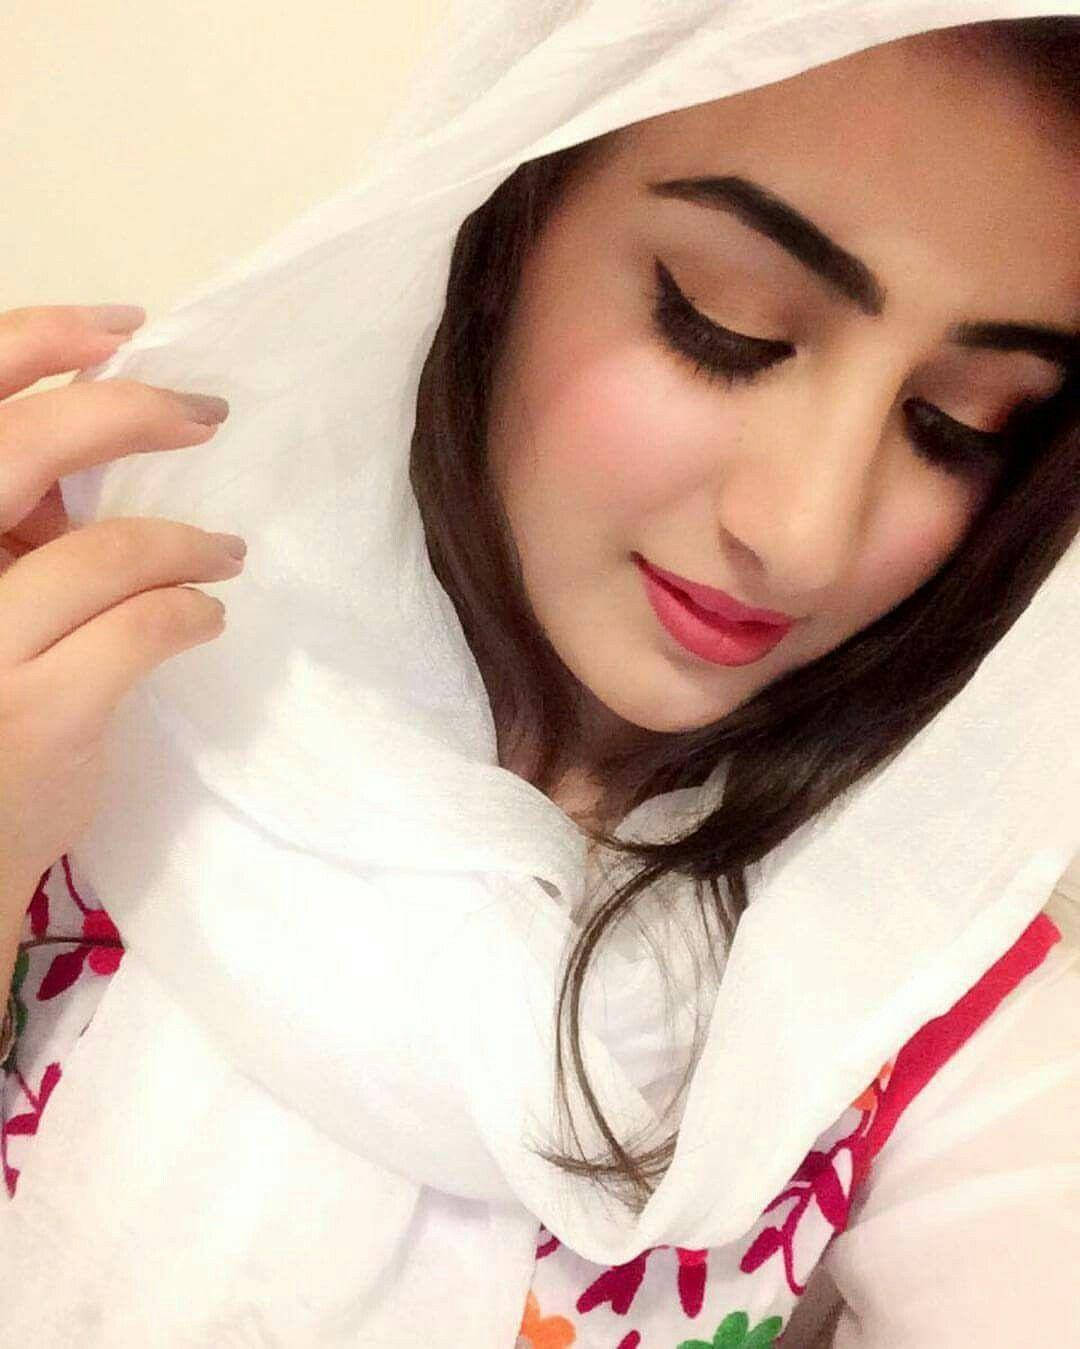 Hijab pige Selvportræt i hvid kjole Wallpaper